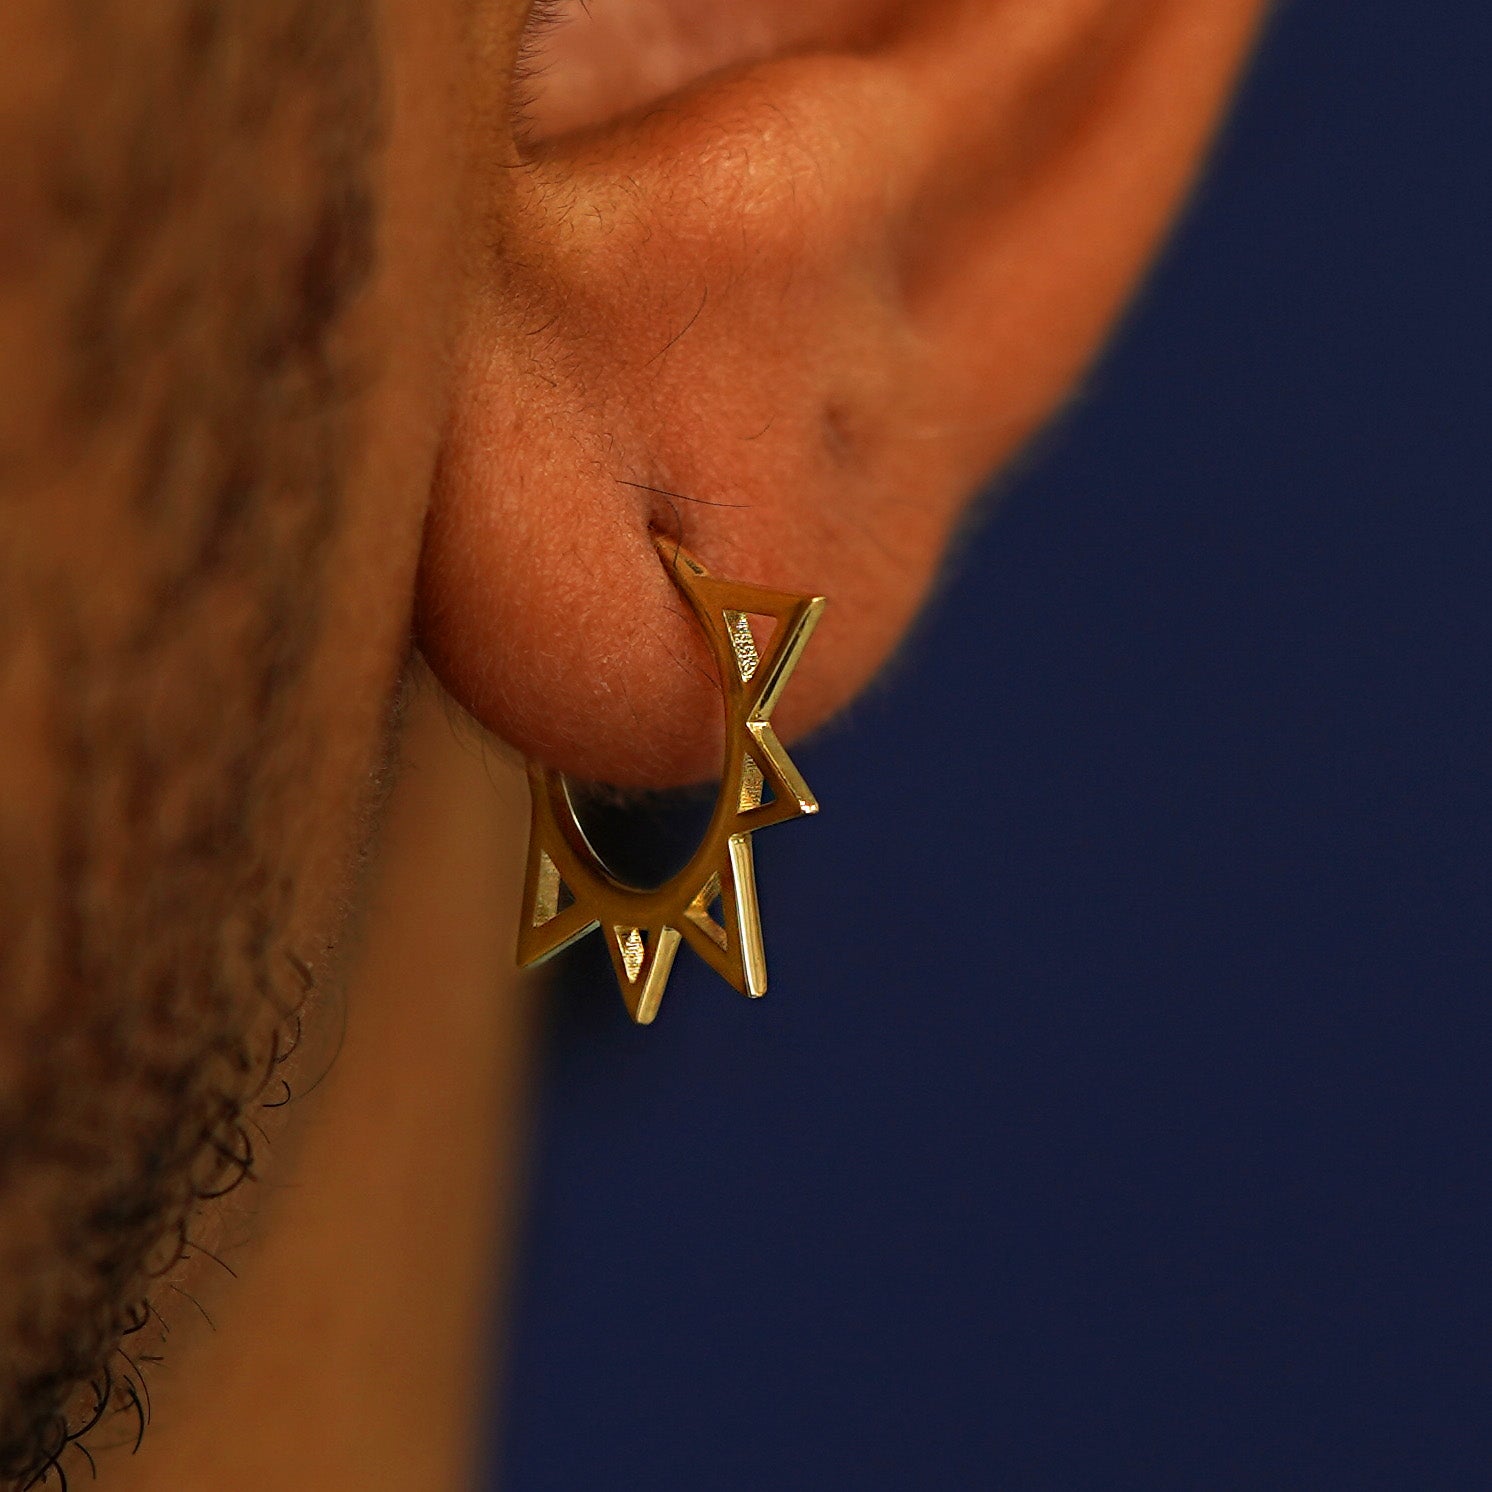 Close up view of a model's ear wearing a Sun Septum as a hoop earring